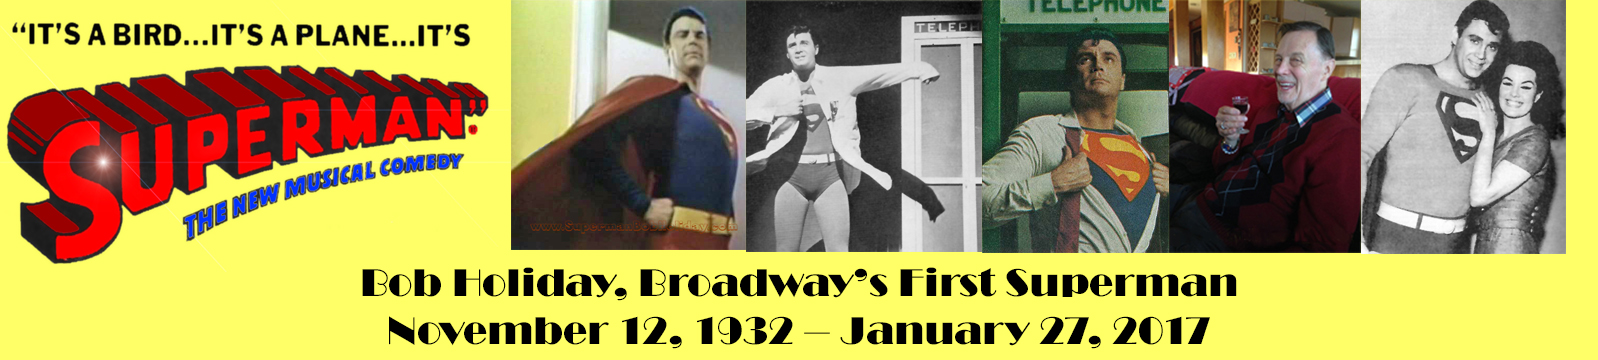 Bob Holiday, Broadway's First Superman